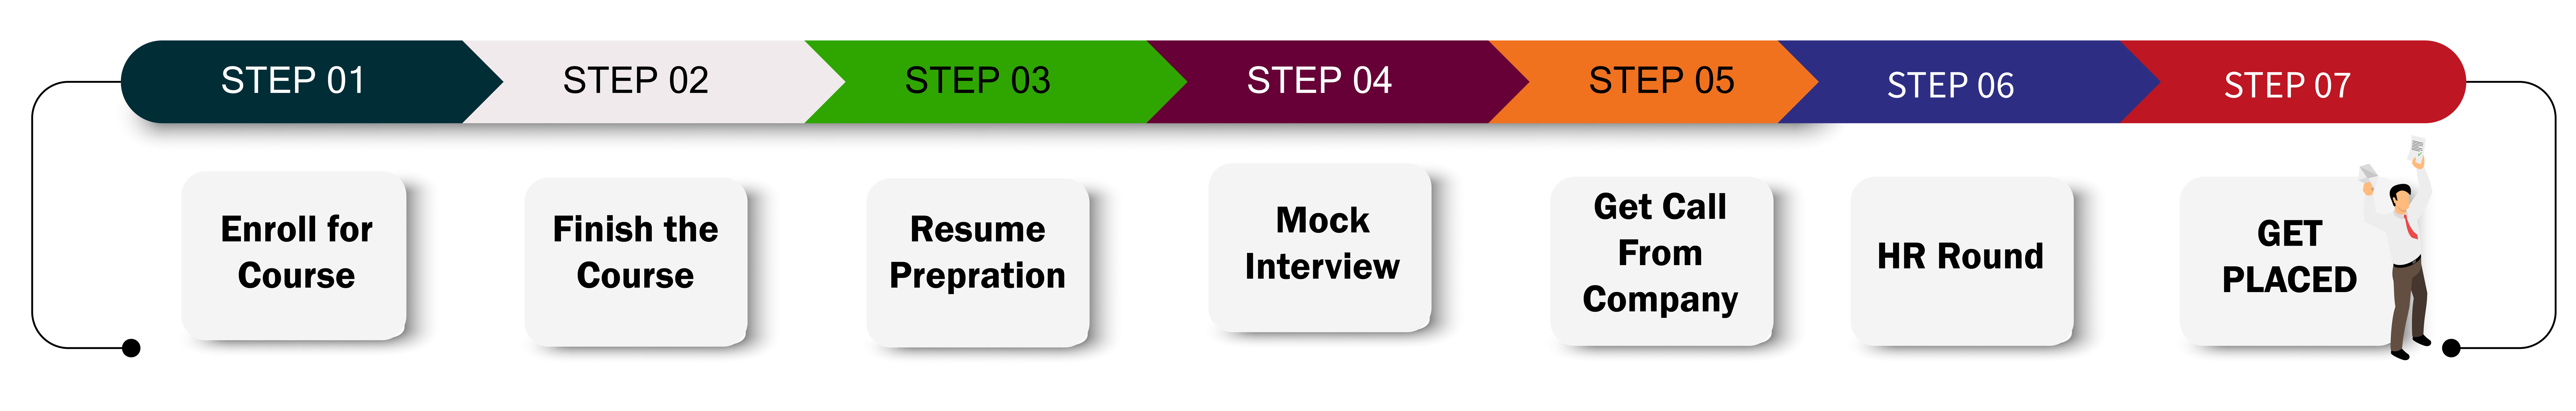 mock interview process